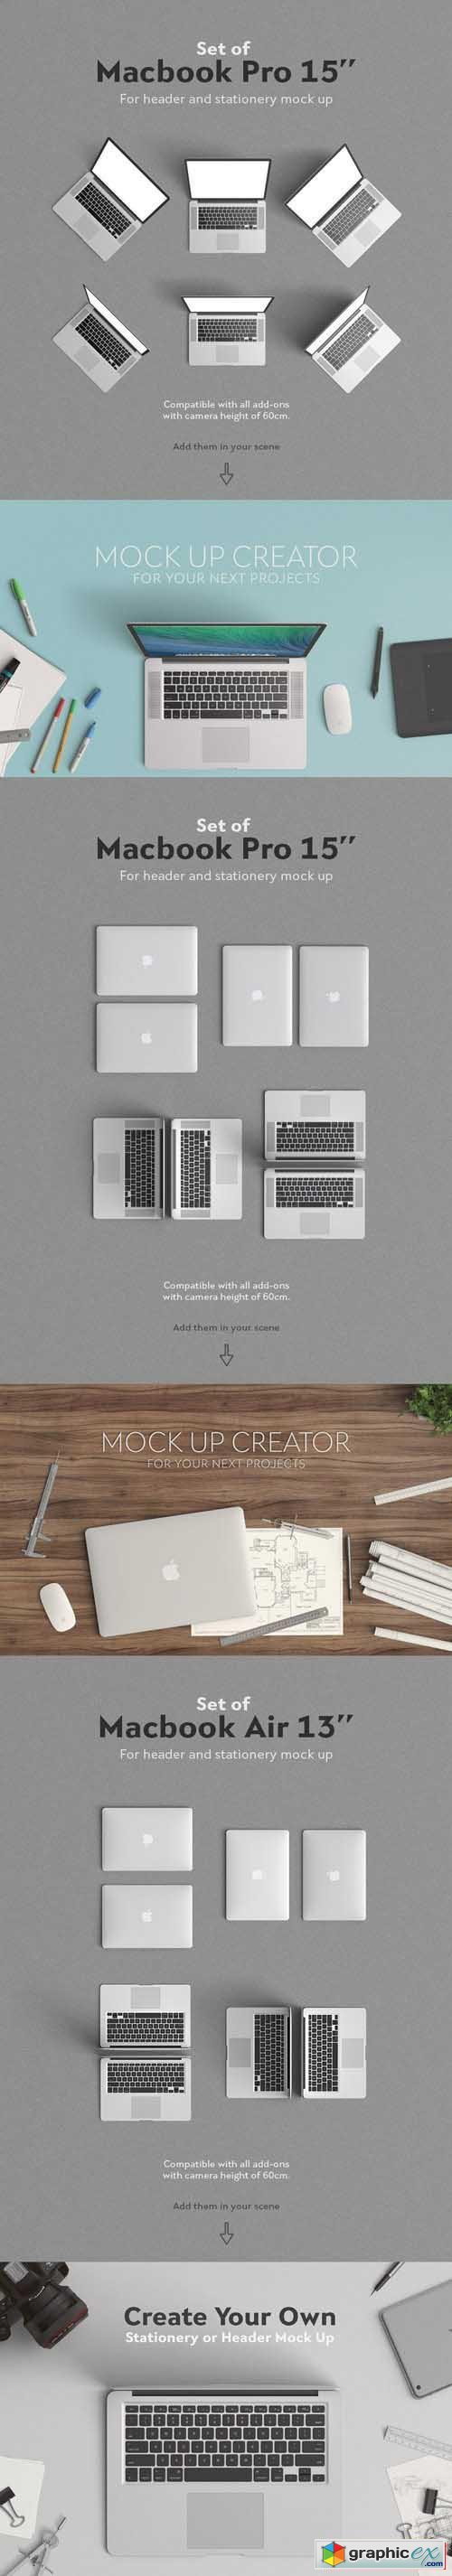 Macbook Mock-up - Architect